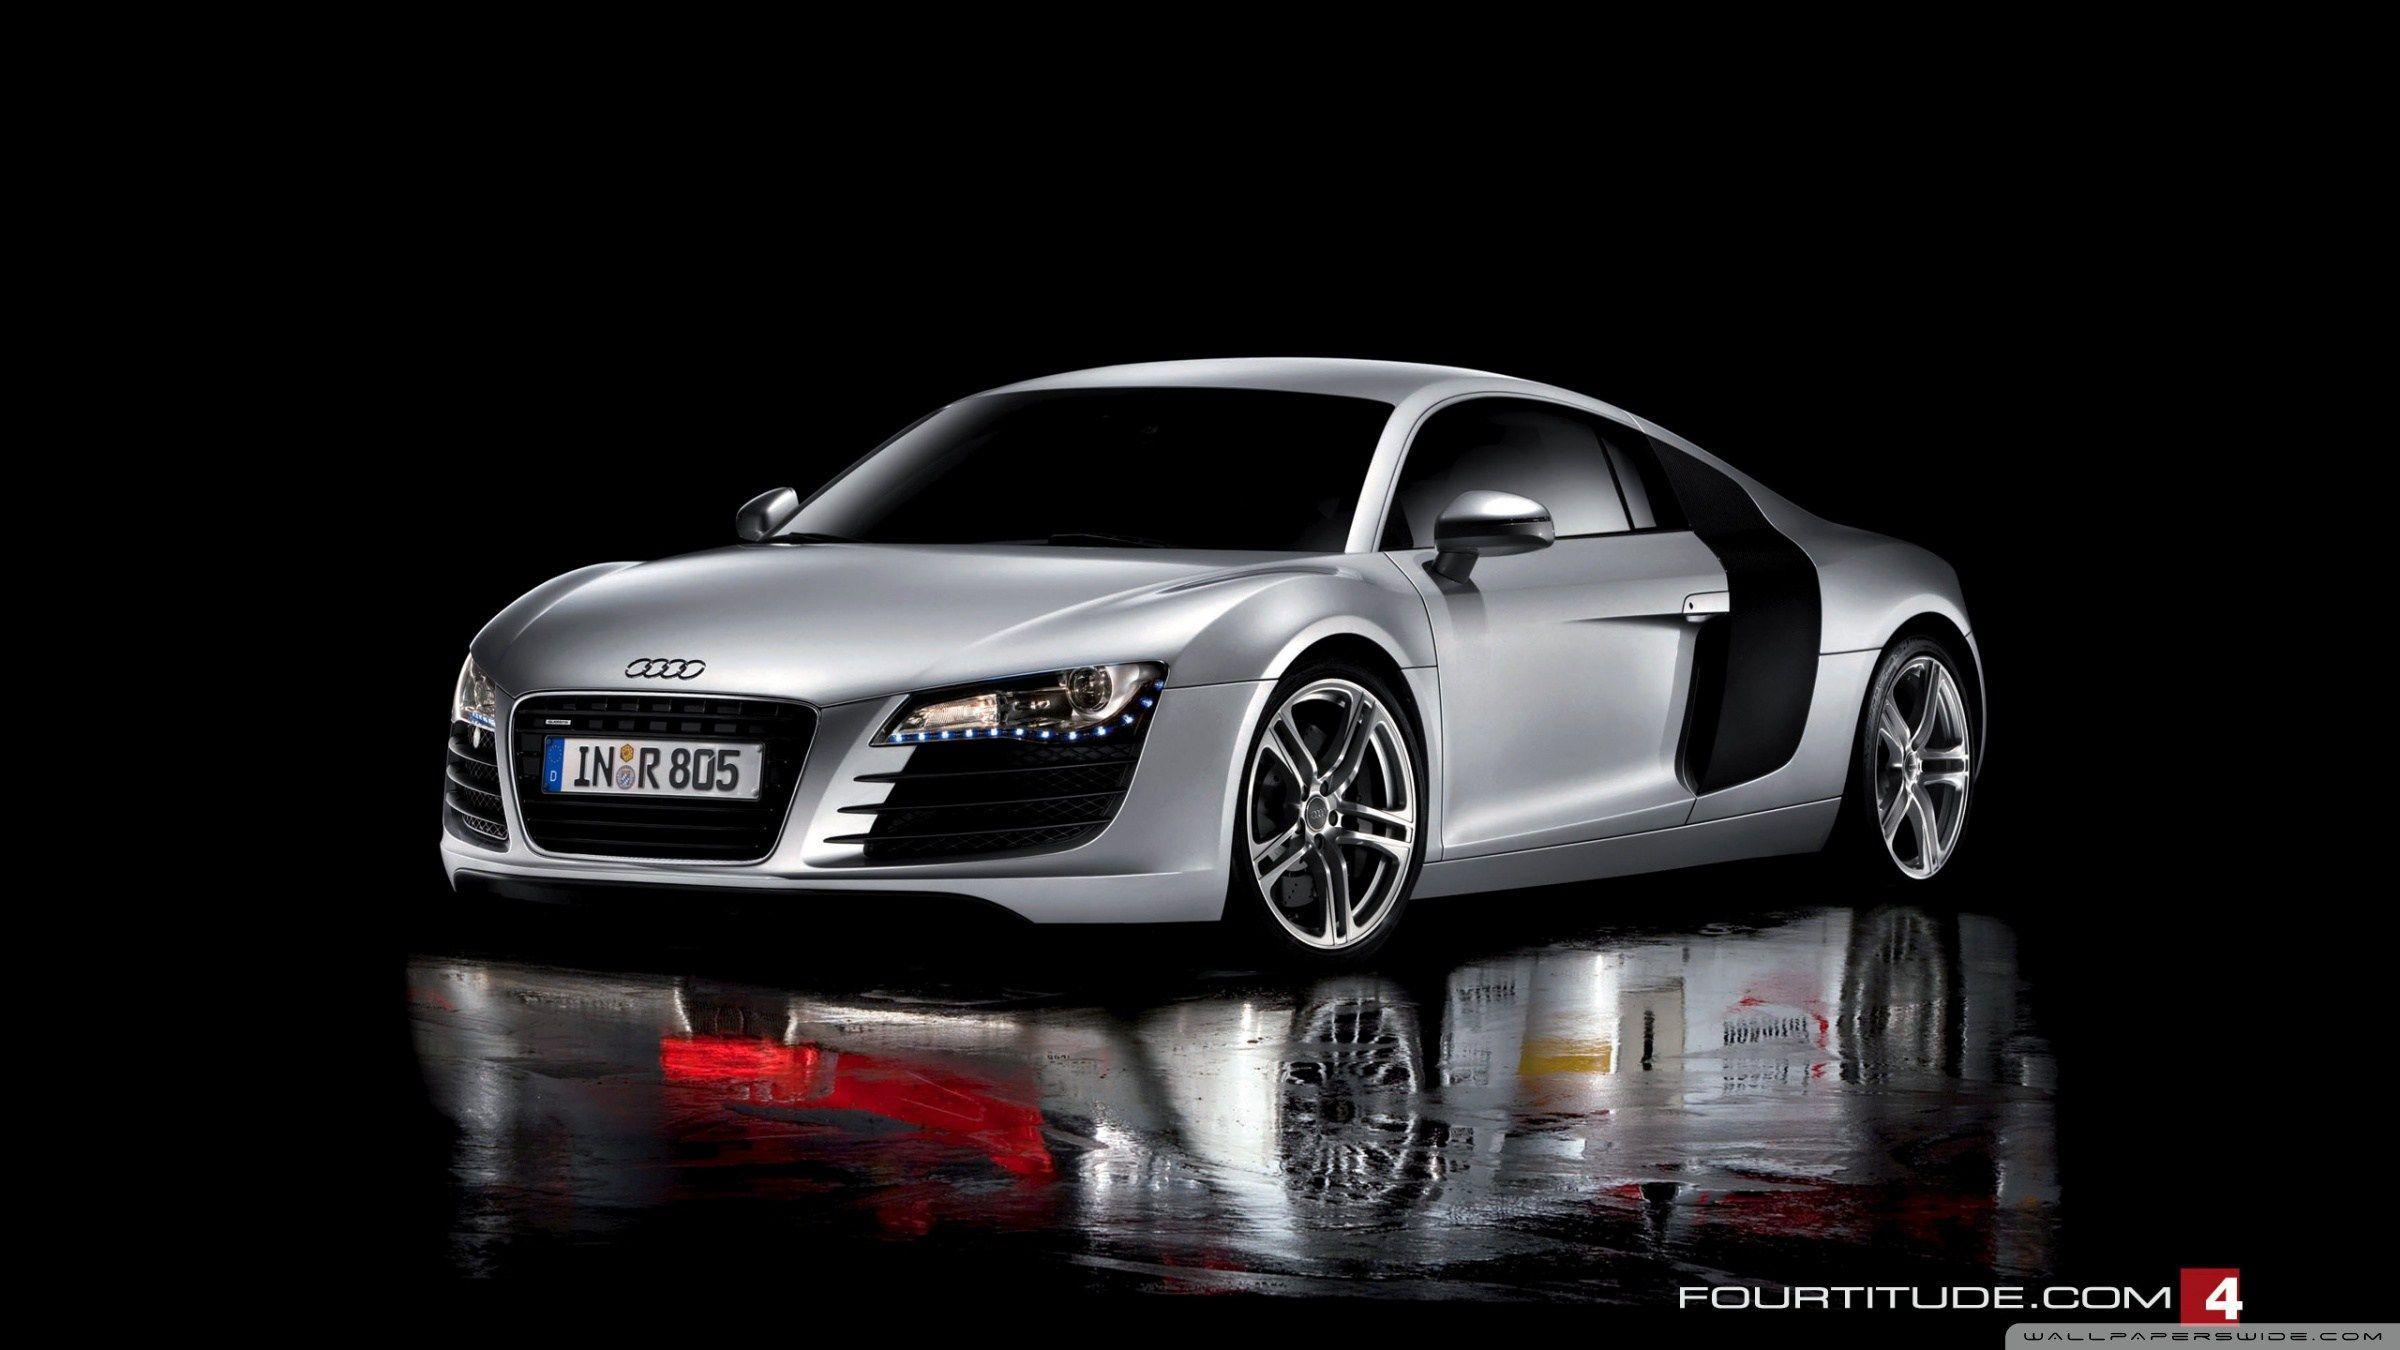 Best 25 Audi R8 Price Ideas. 25 Best Ideas About Audi